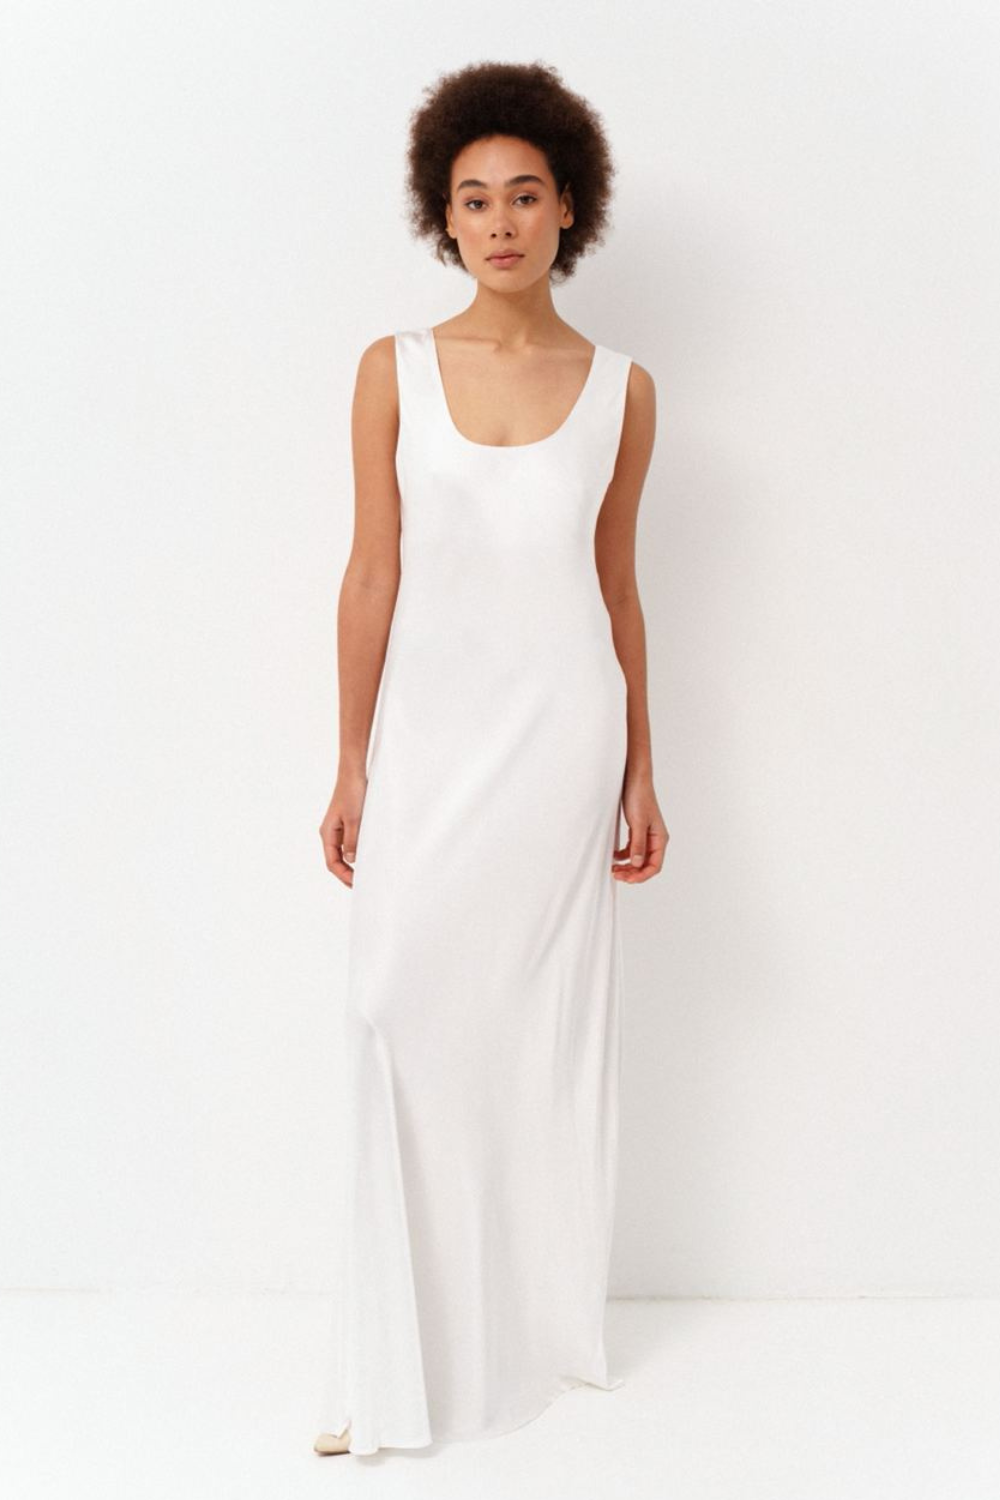 Slip dress, white, (Corsis), 21-003B